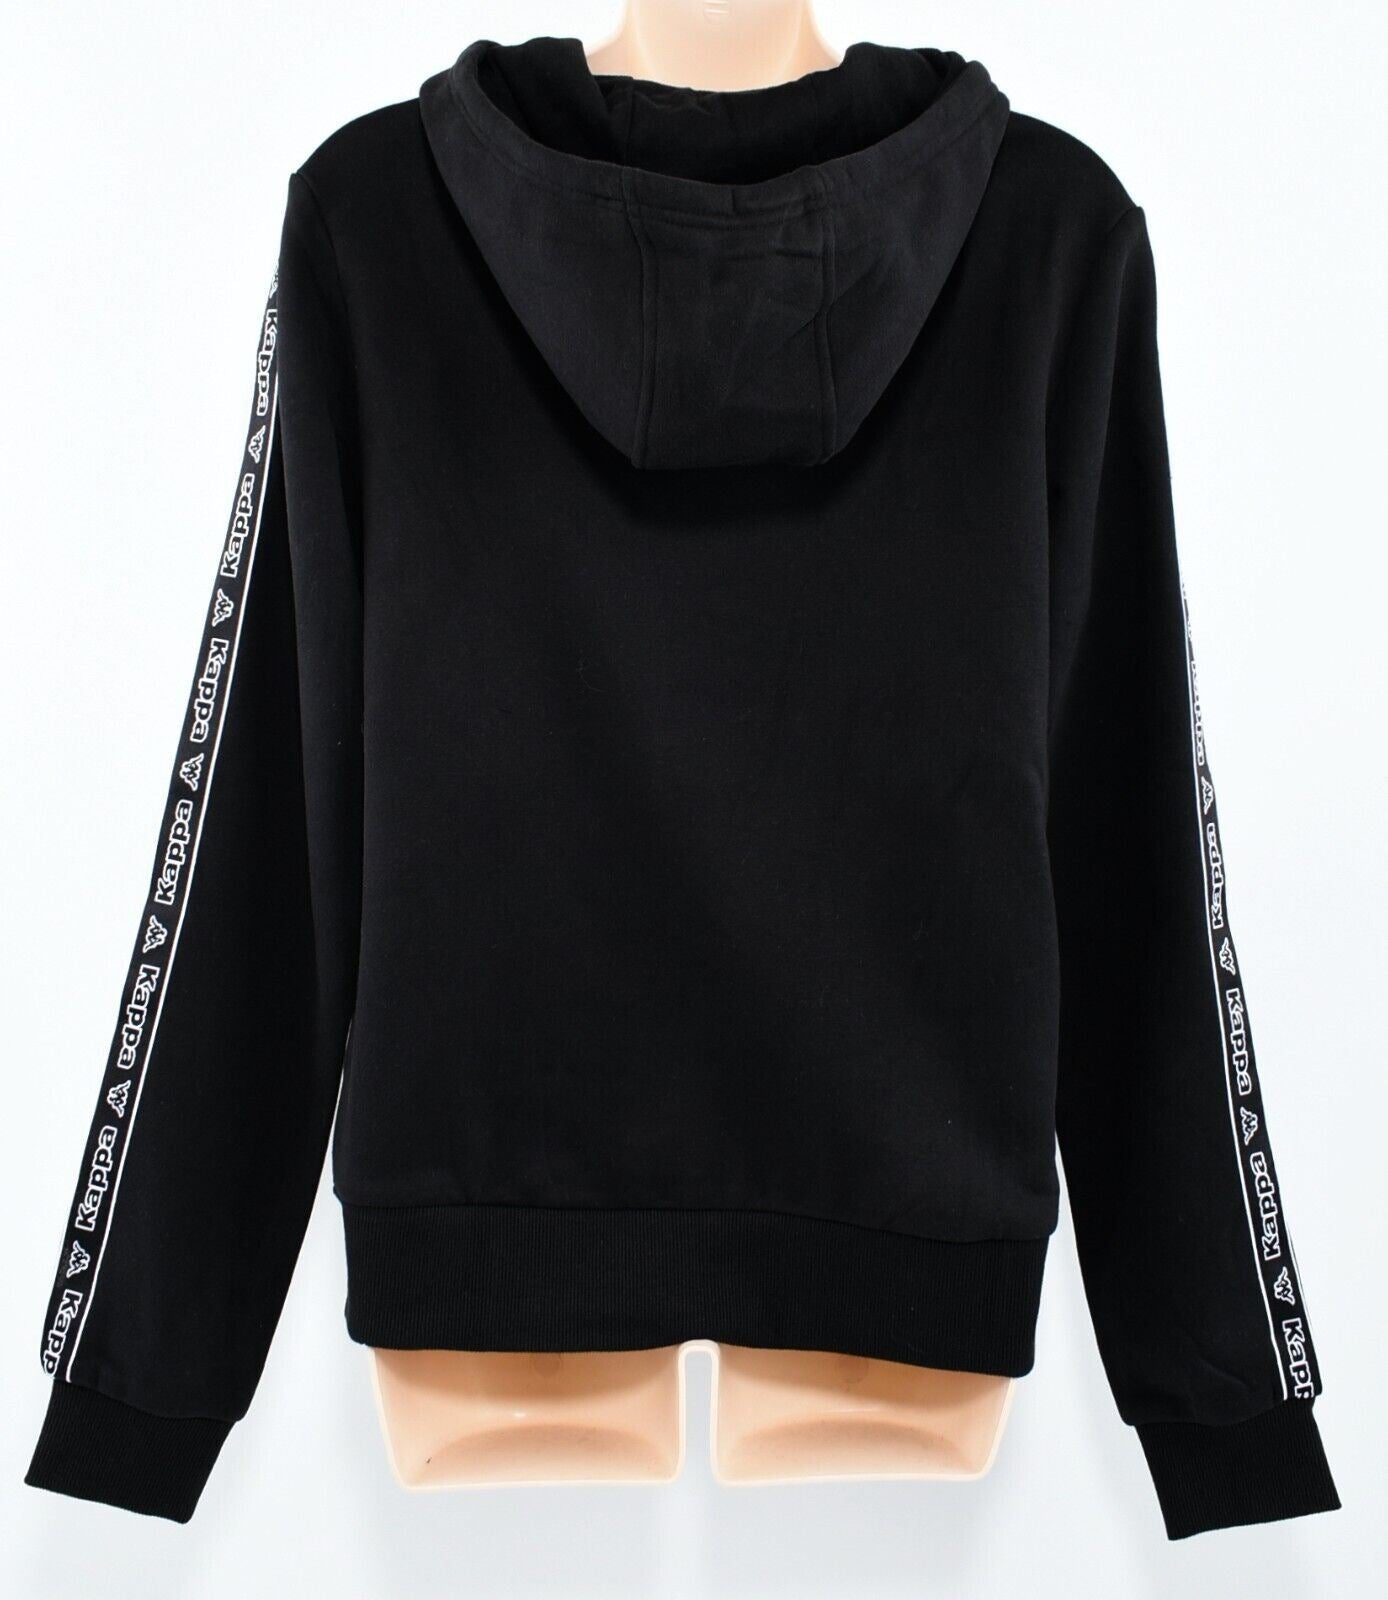 KAPPA Women's Full Zip Hoodie Jacket Sweatshirt, Black, size S (UK 10)